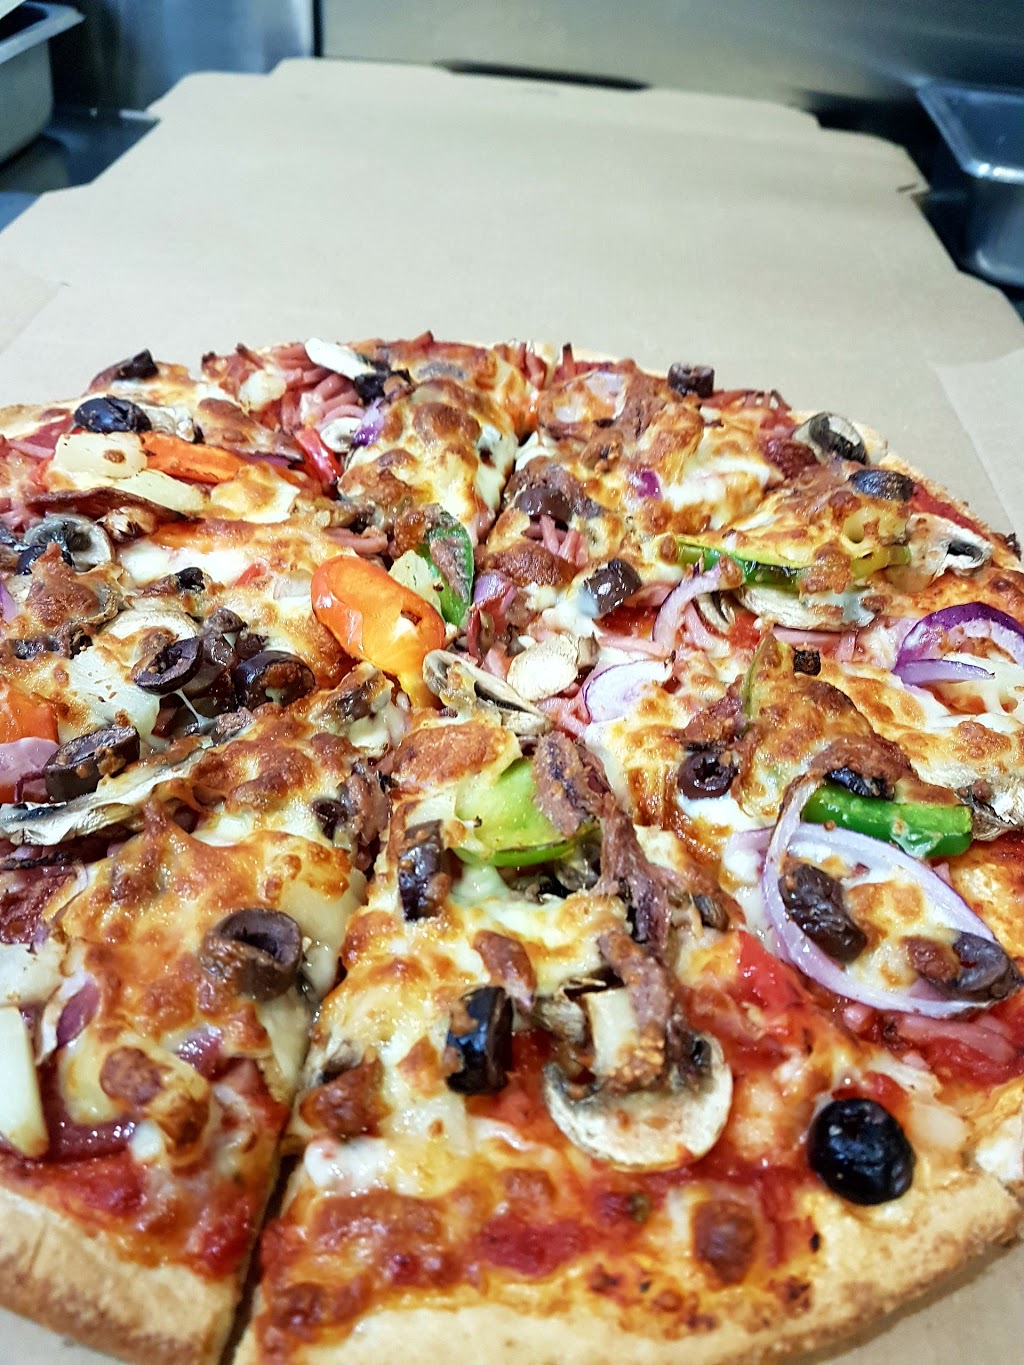 Crisp Pizza Bar | meal takeaway | 22/16 Yarrabilba Dr, Yarrabilba QLD 4207, Australia | 0731802647 OR +61 7 3180 2647